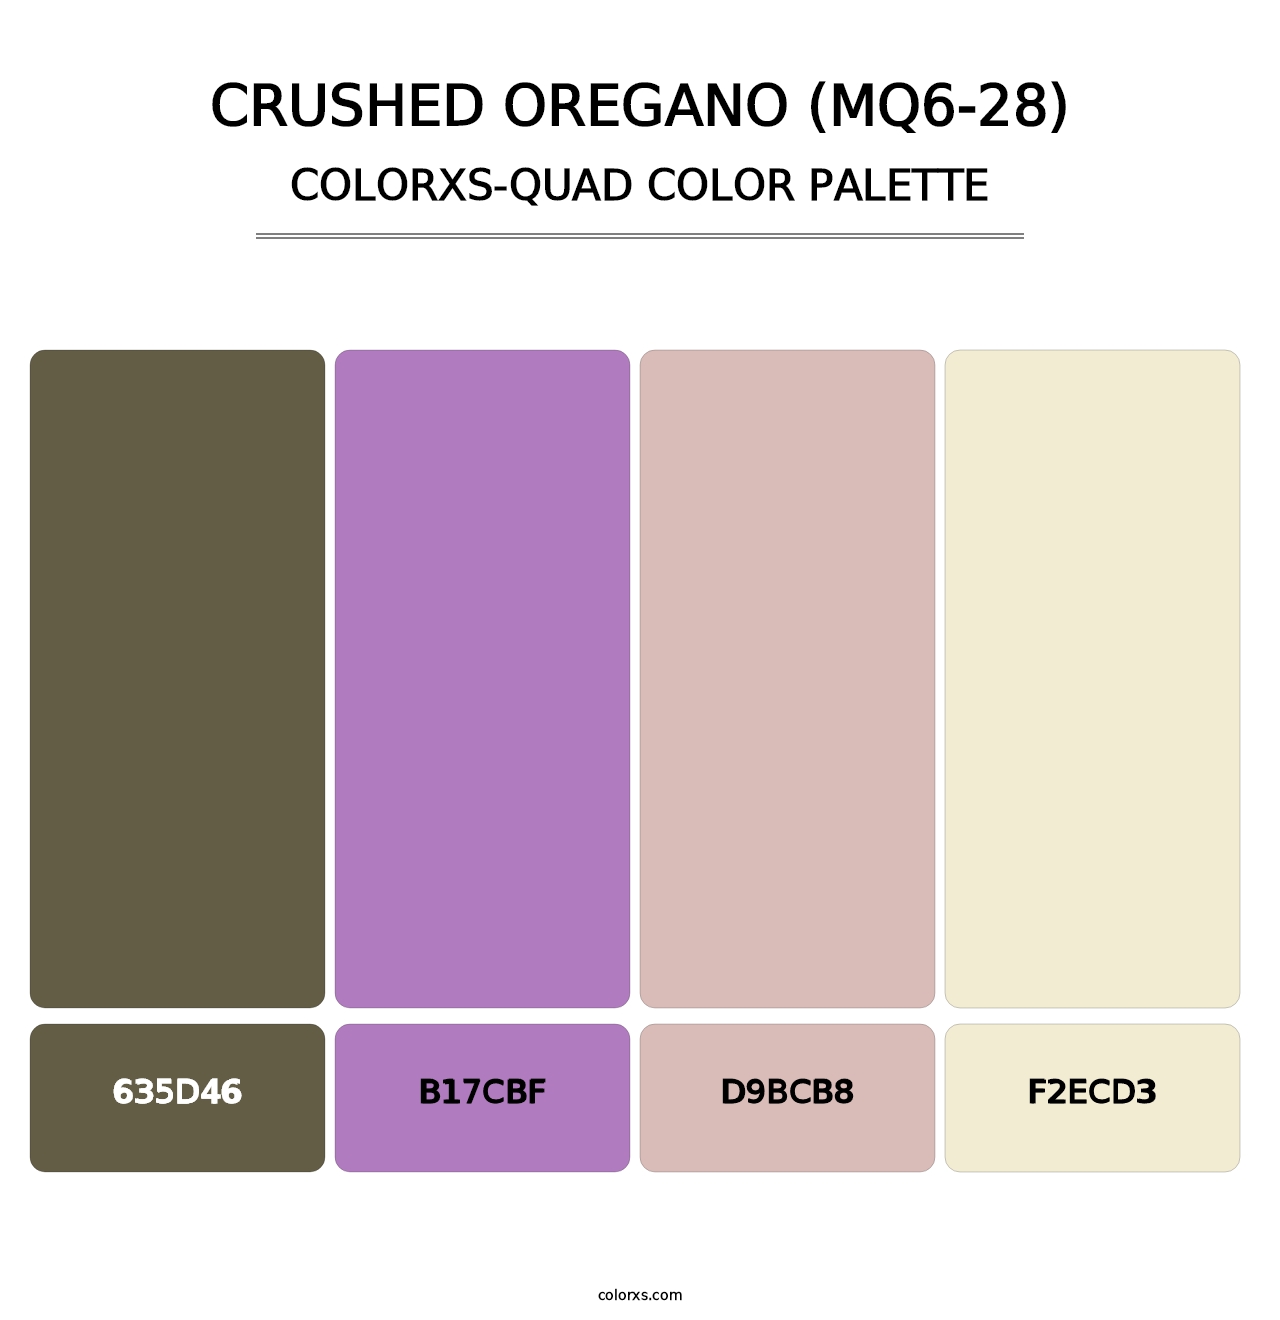 Crushed Oregano (MQ6-28) - Colorxs Quad Palette